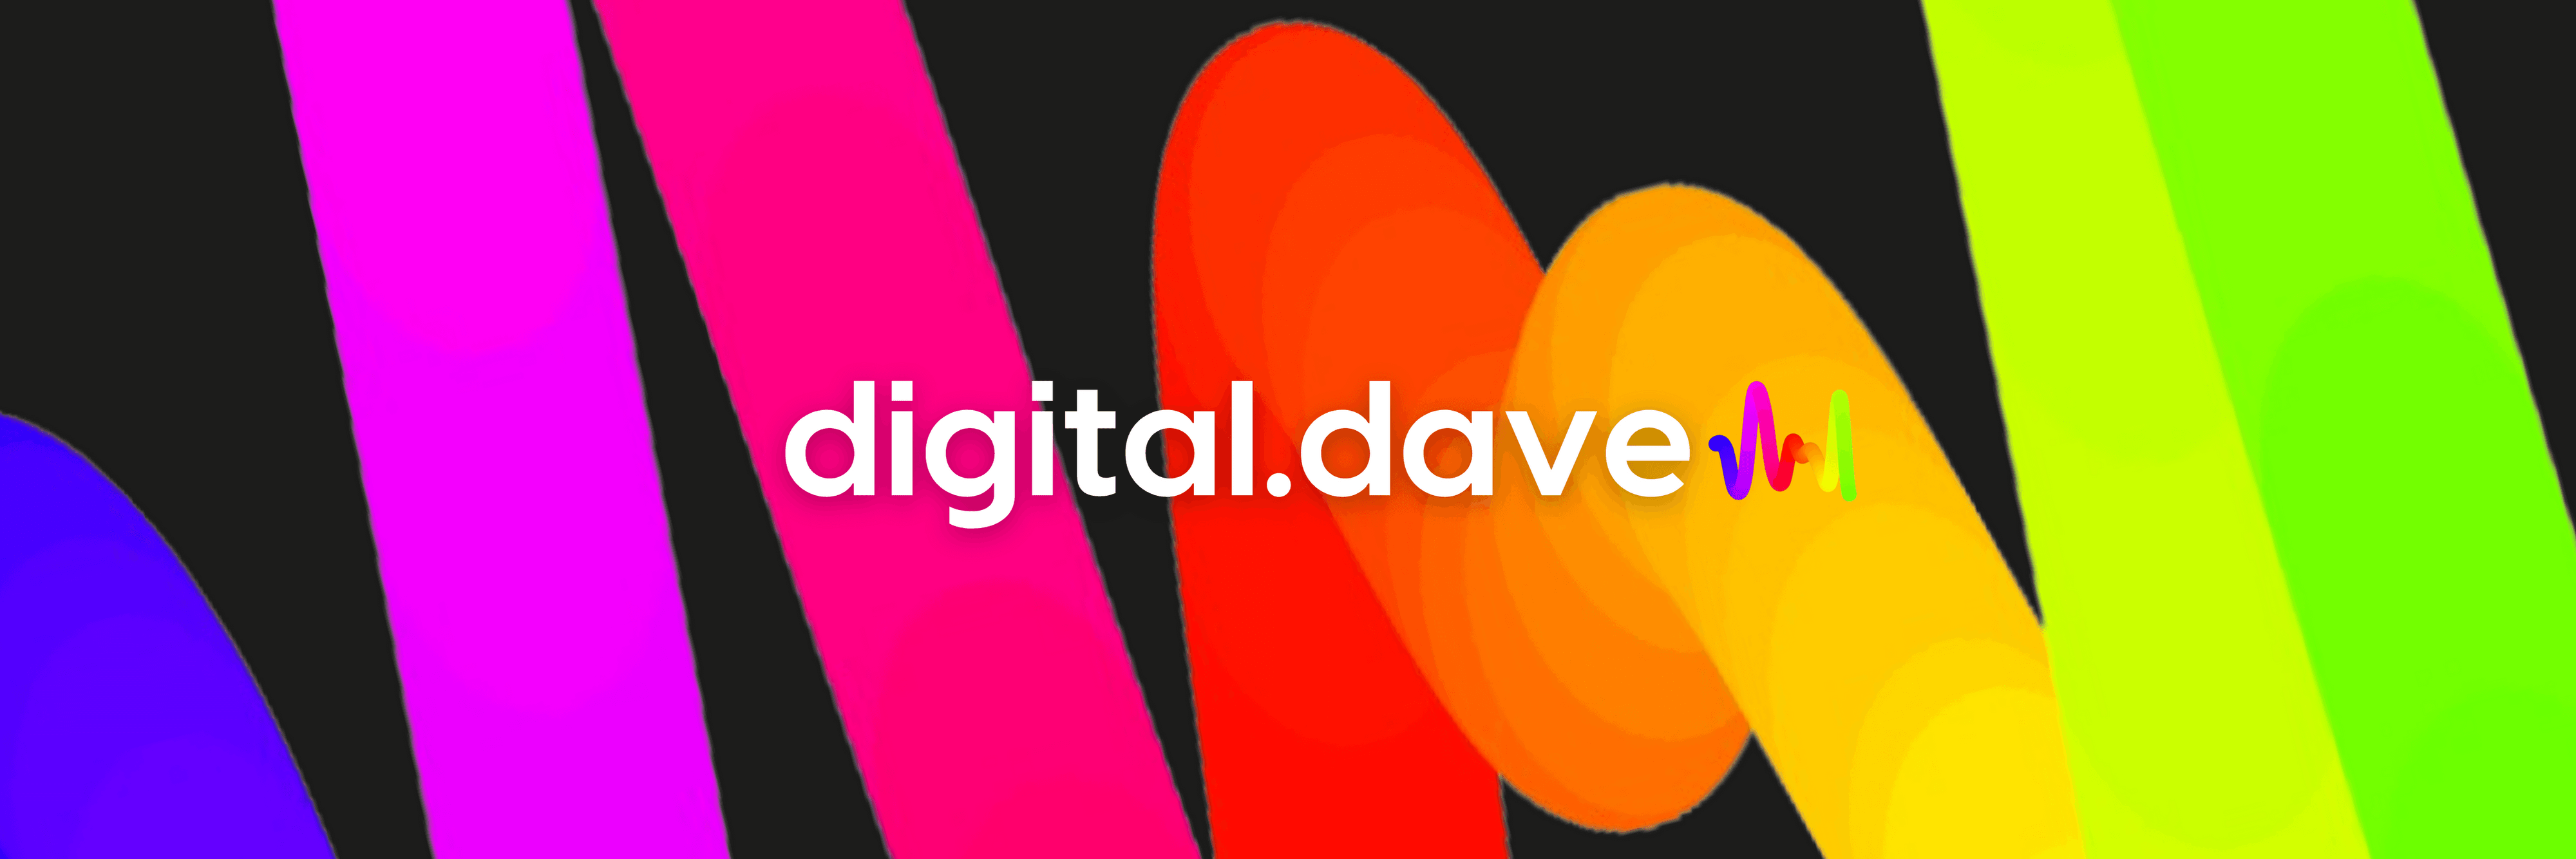 DigitalDaveWeb3 バナー